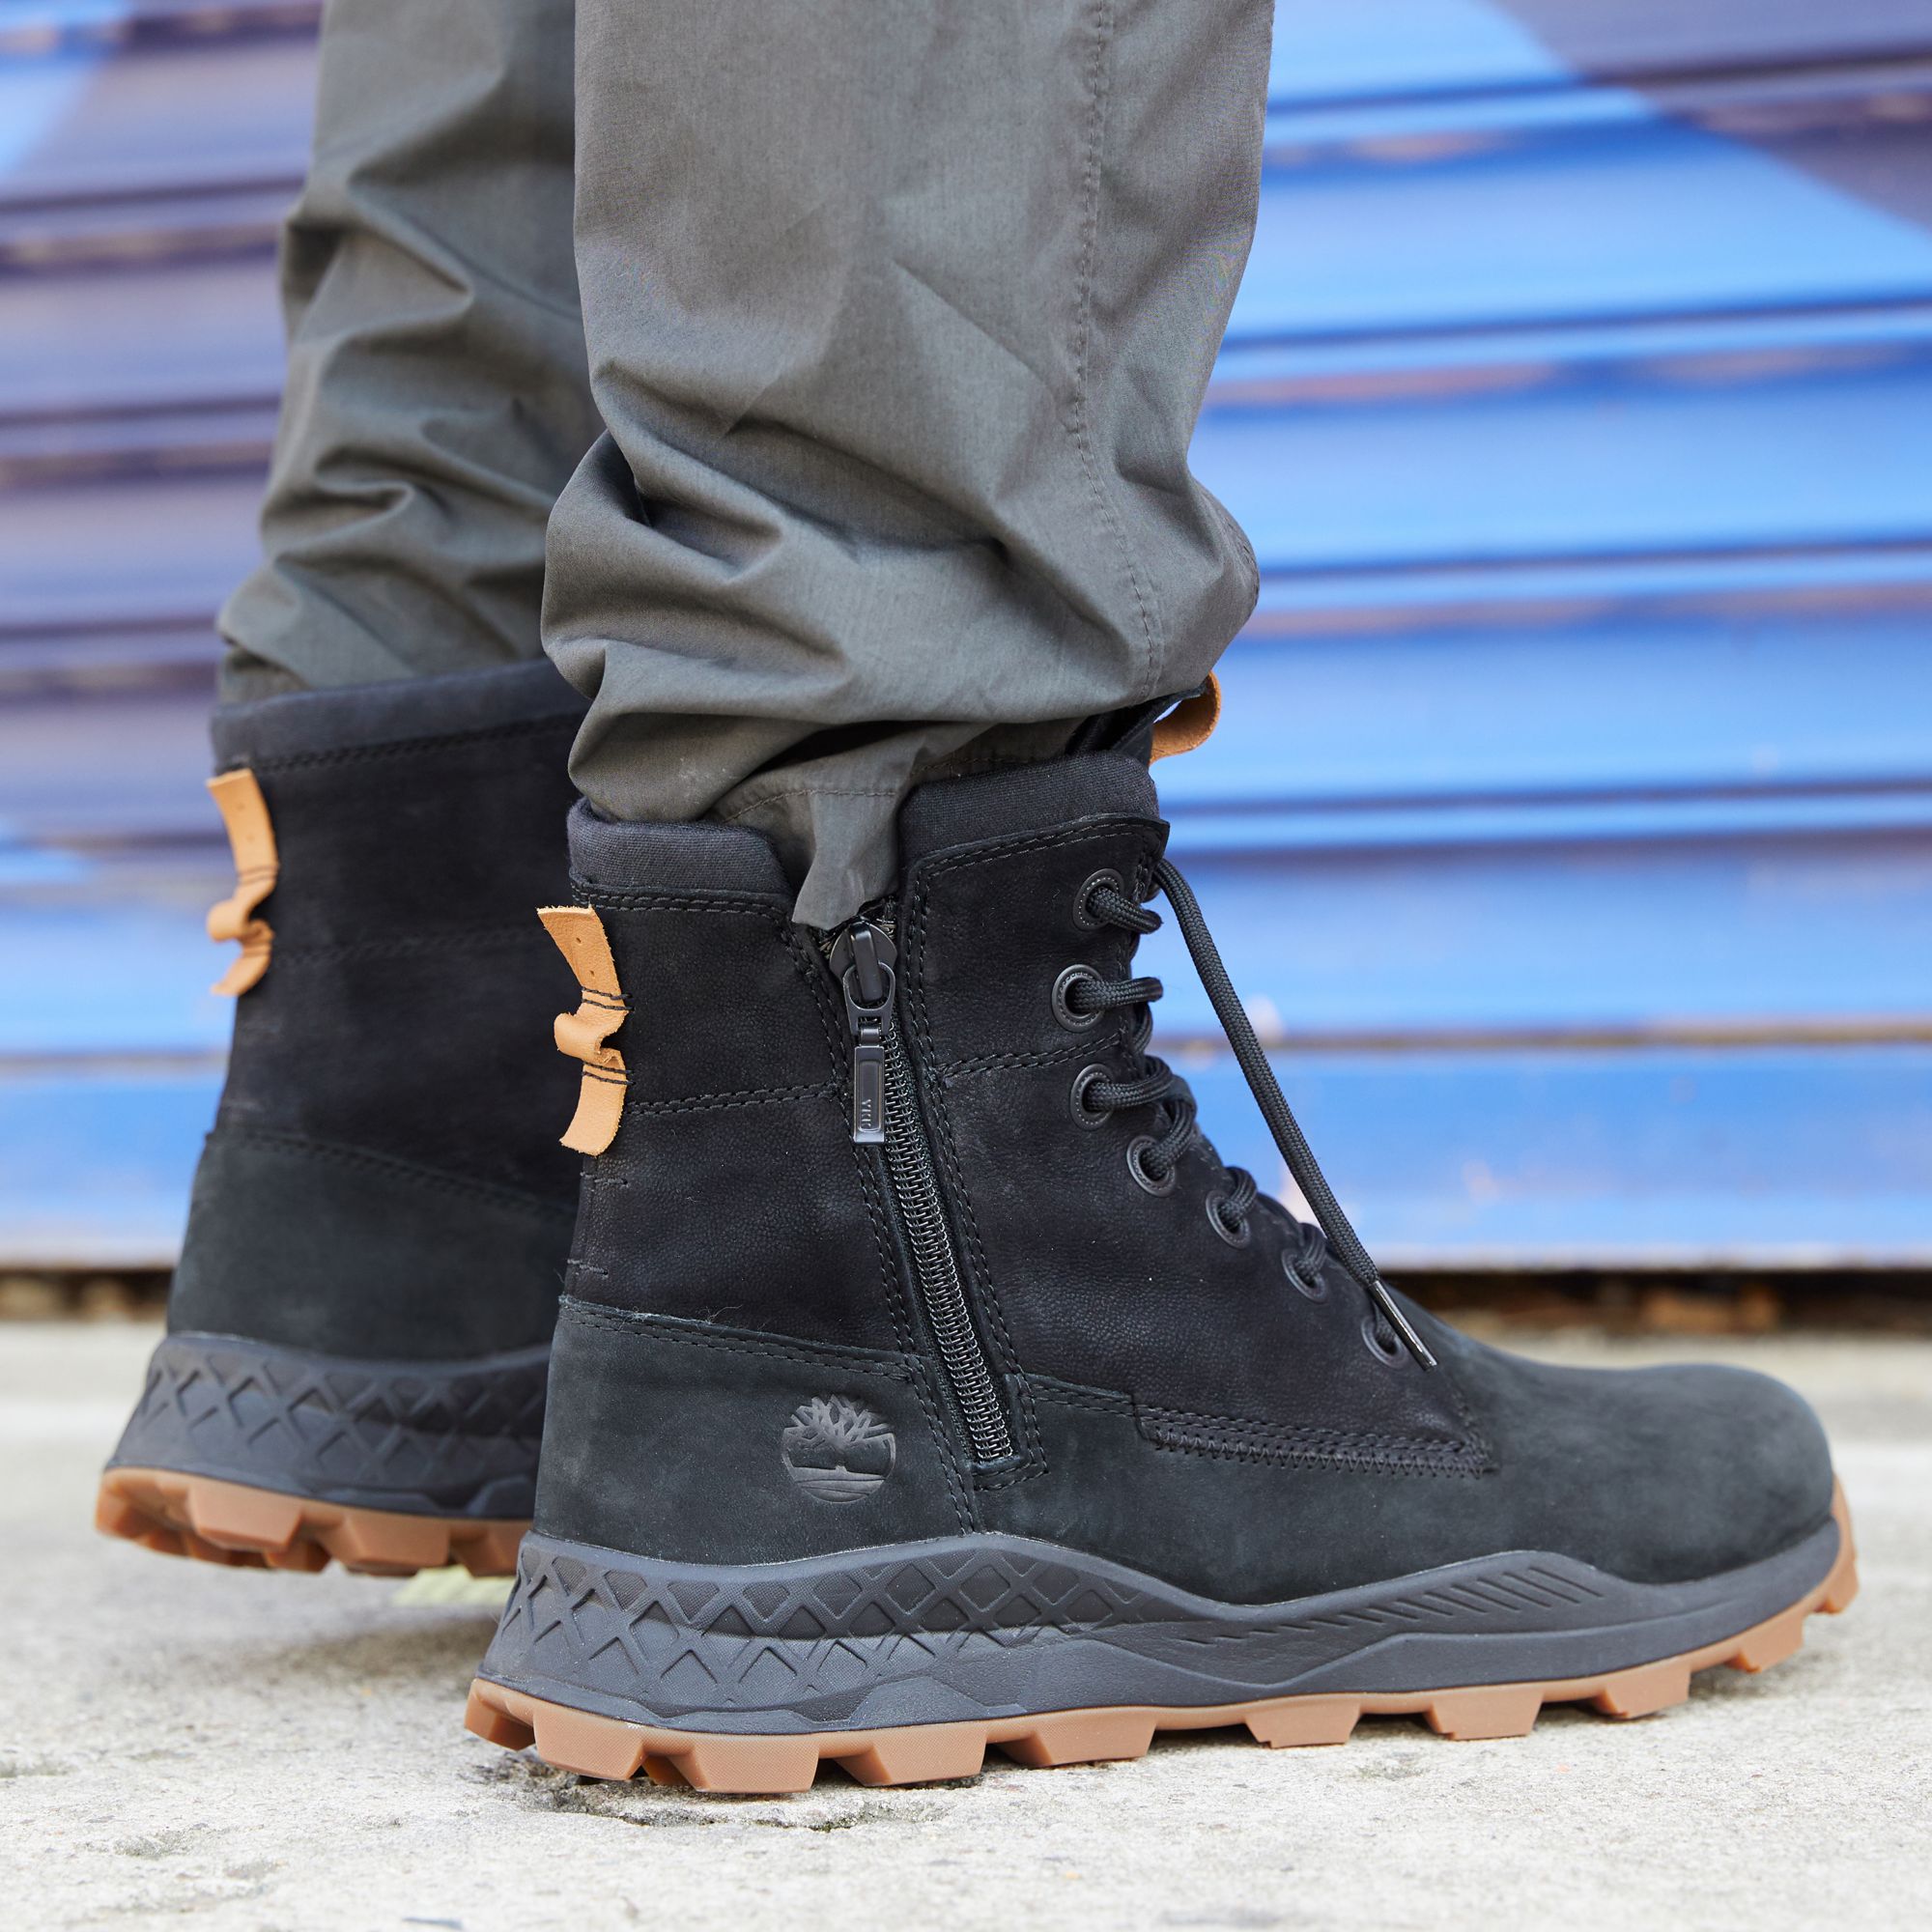 timberland men's brooklyn side zip boot